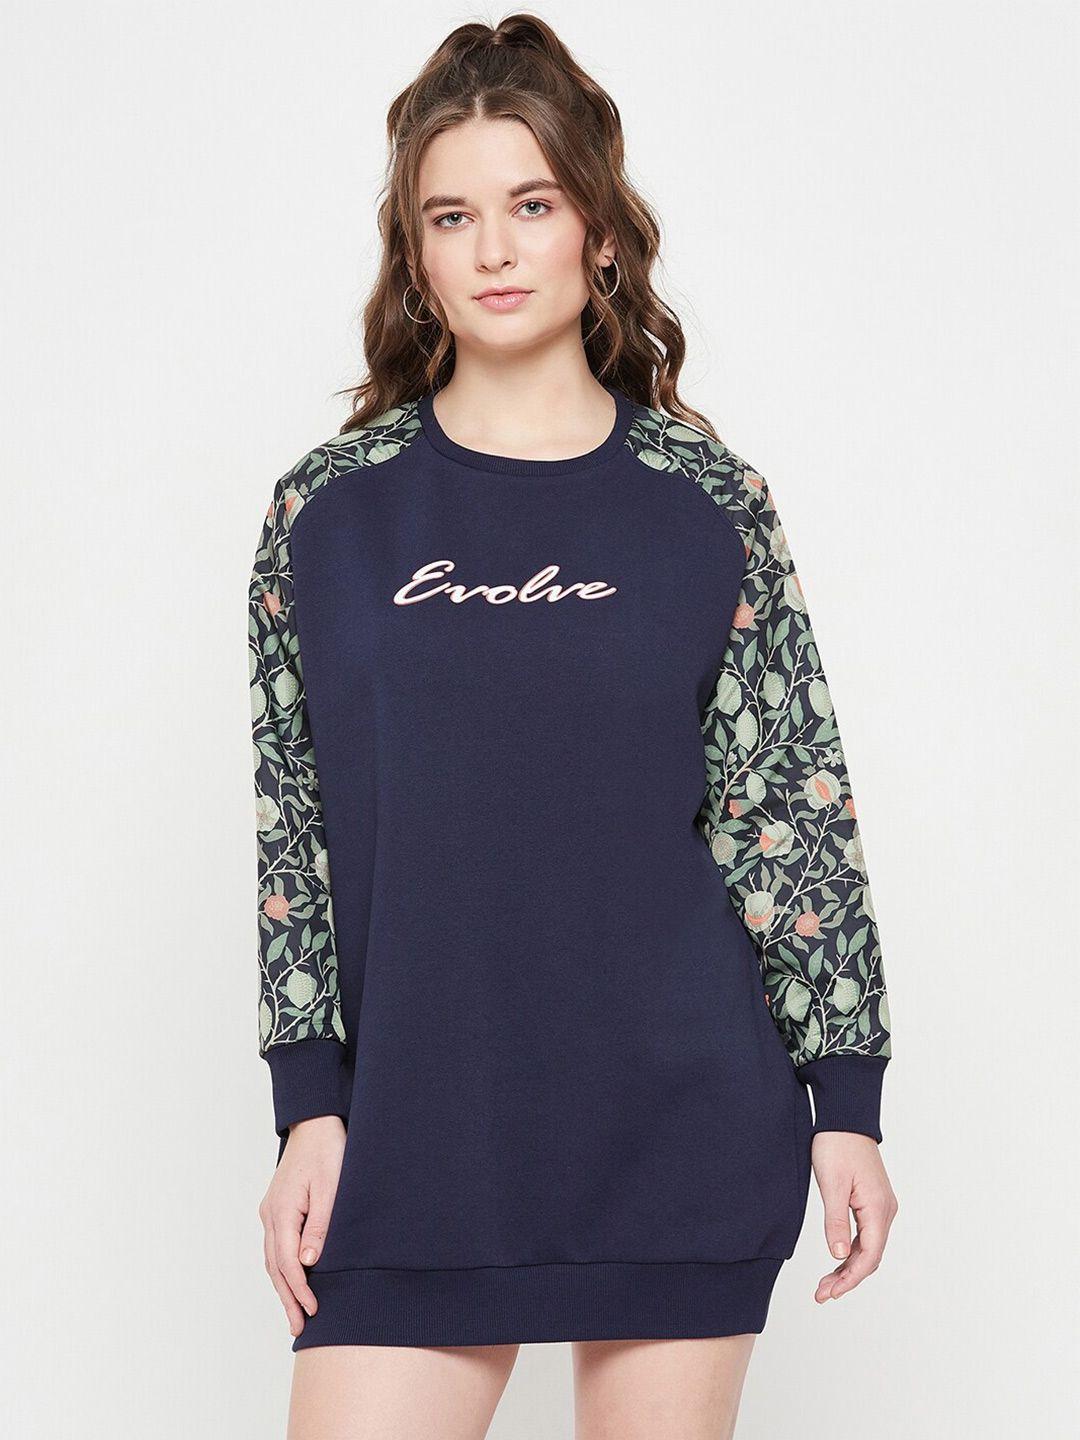 edrio floral printed t-shirt mini dress